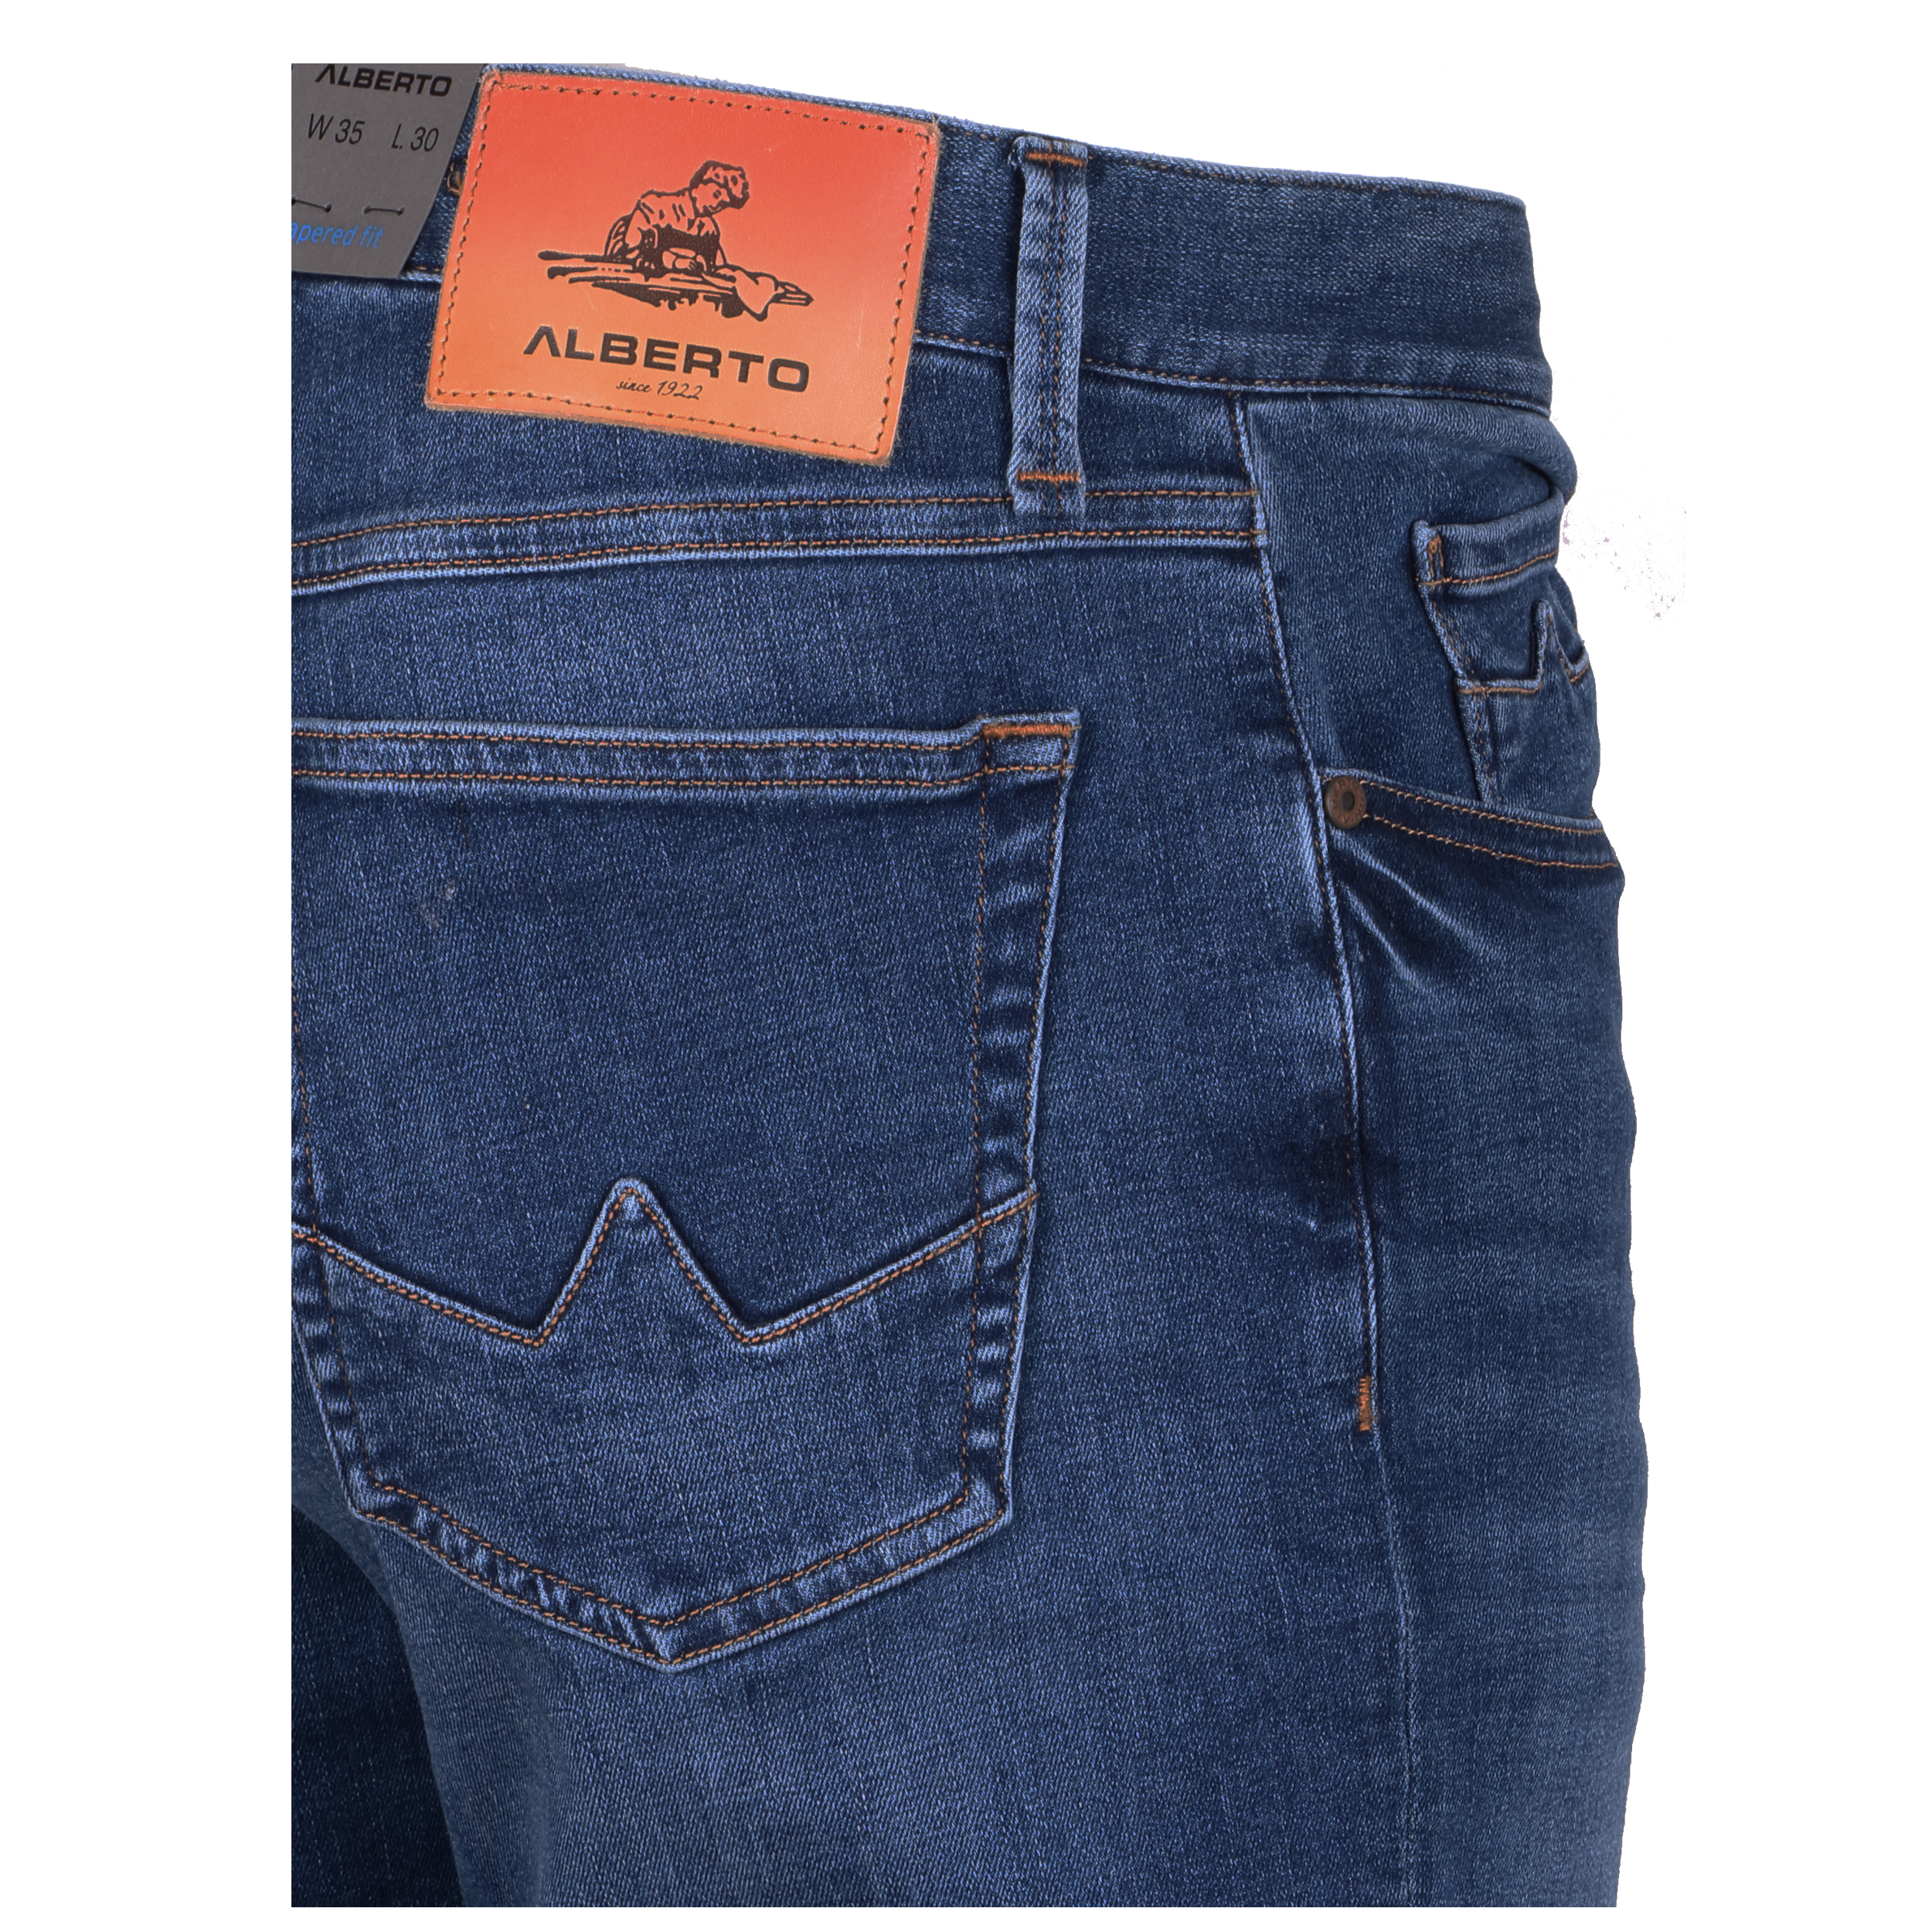 Alberto Herren Jeans Slipe tapered fit - blau 33/30